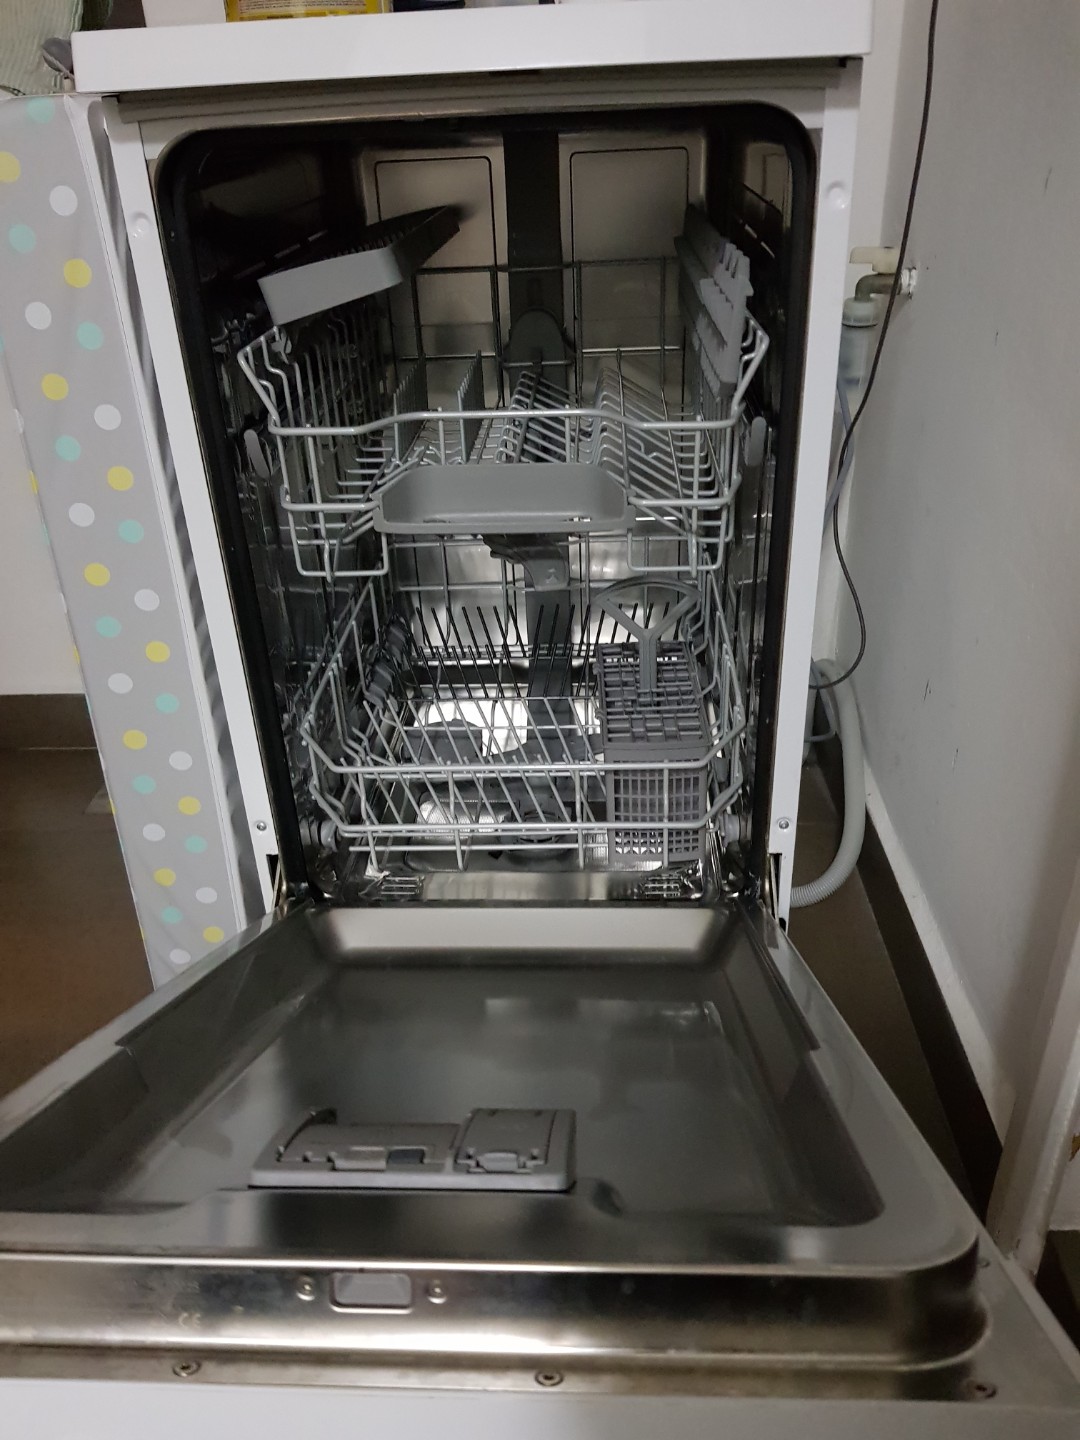 bosch dishwasher serie 4 silence plus manual